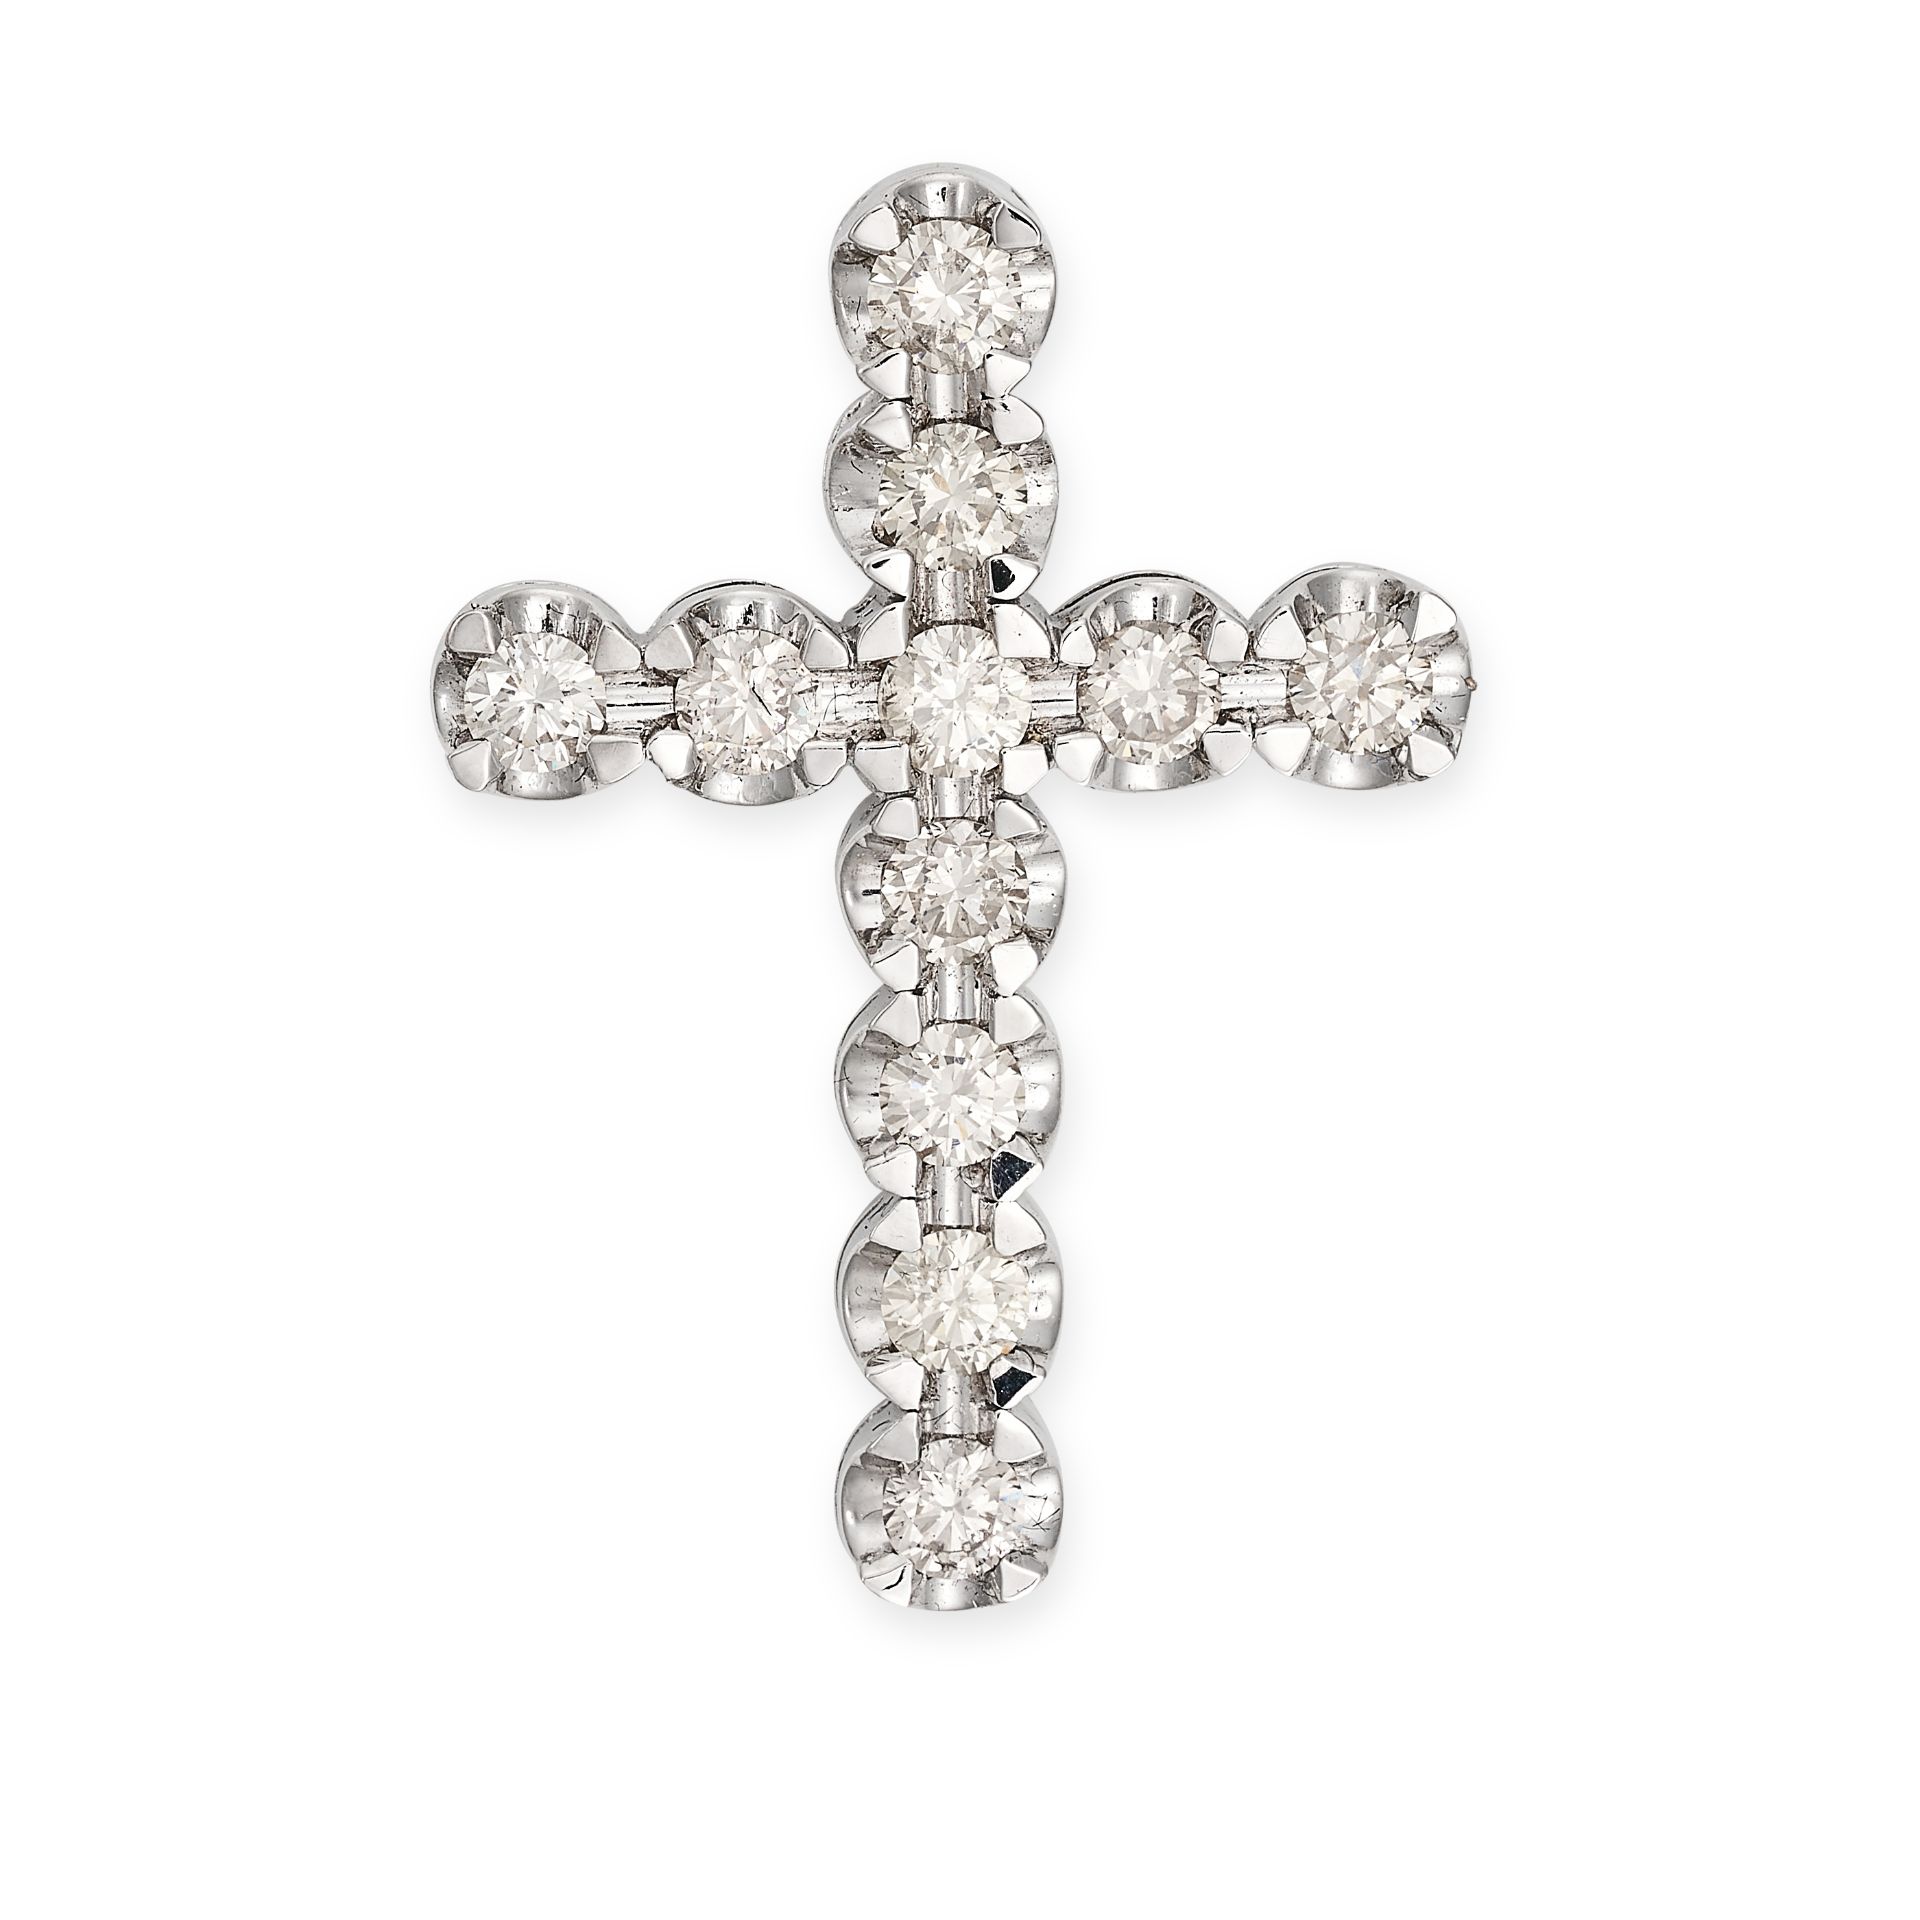 A DIAMOND CROSS PENDANT in white gold, designed as a cross set with round brilliant cut diamonds,...